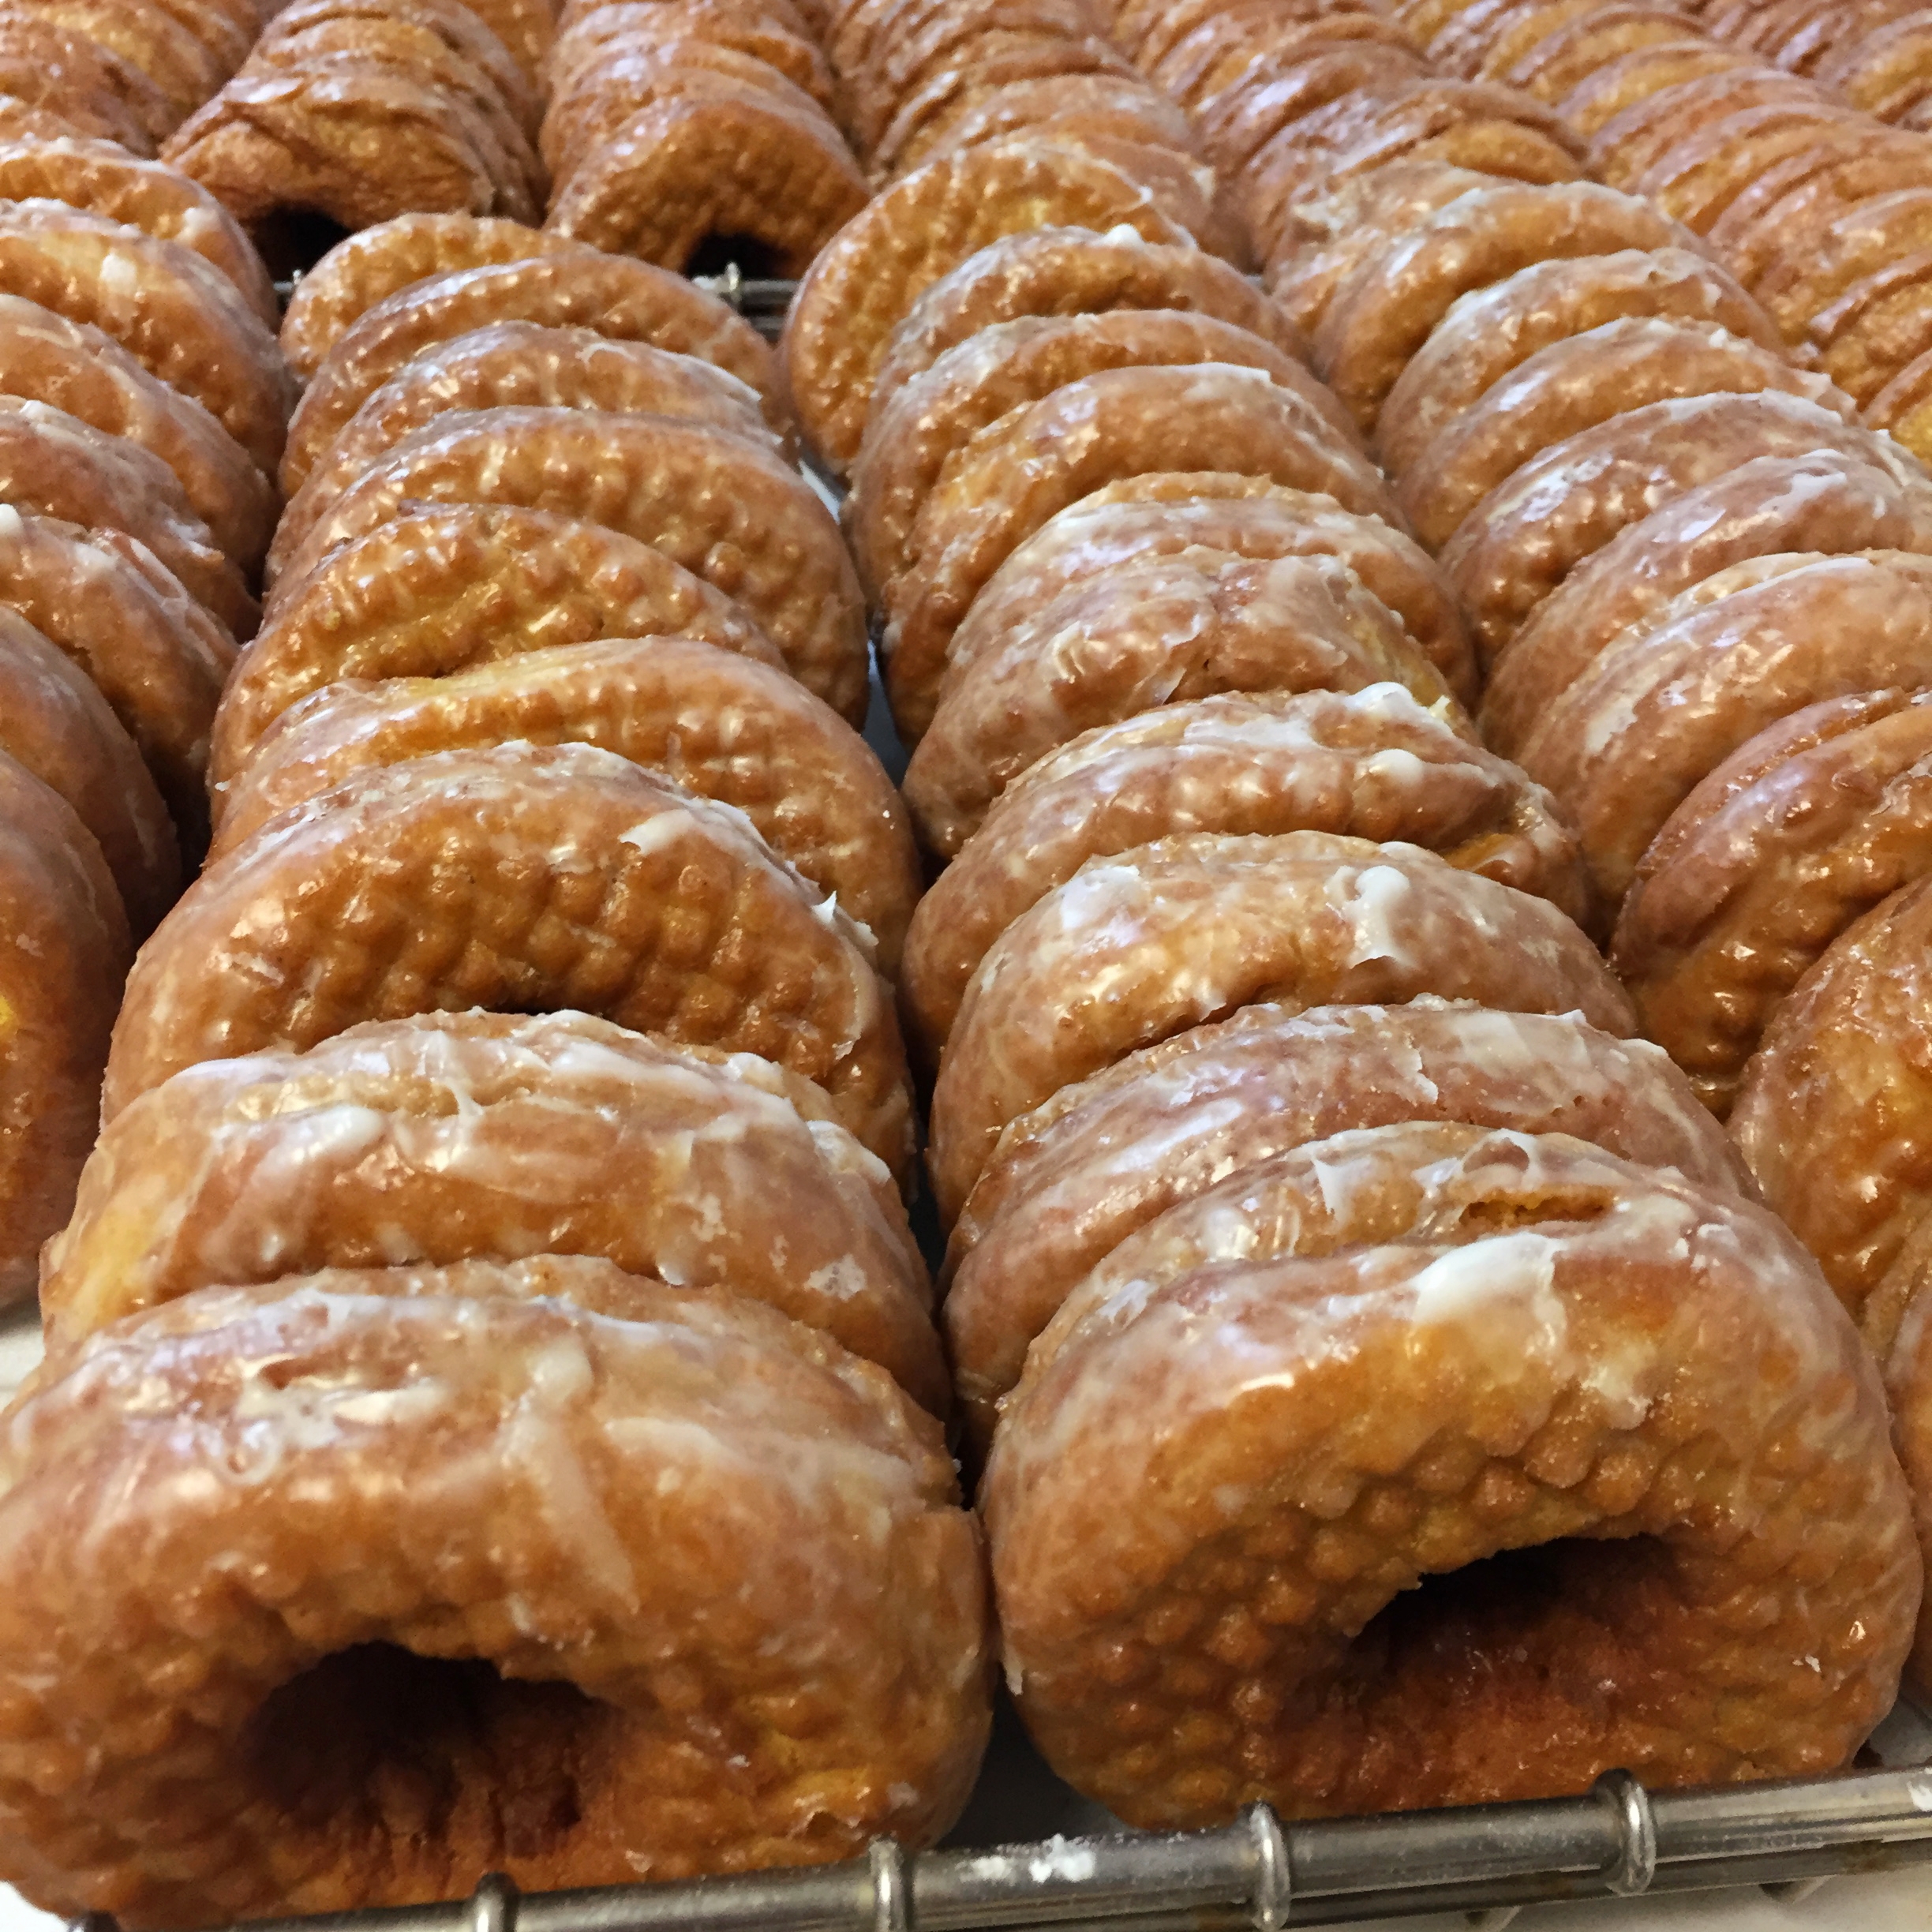 Dozens of glazed pumpkin donuts in rows